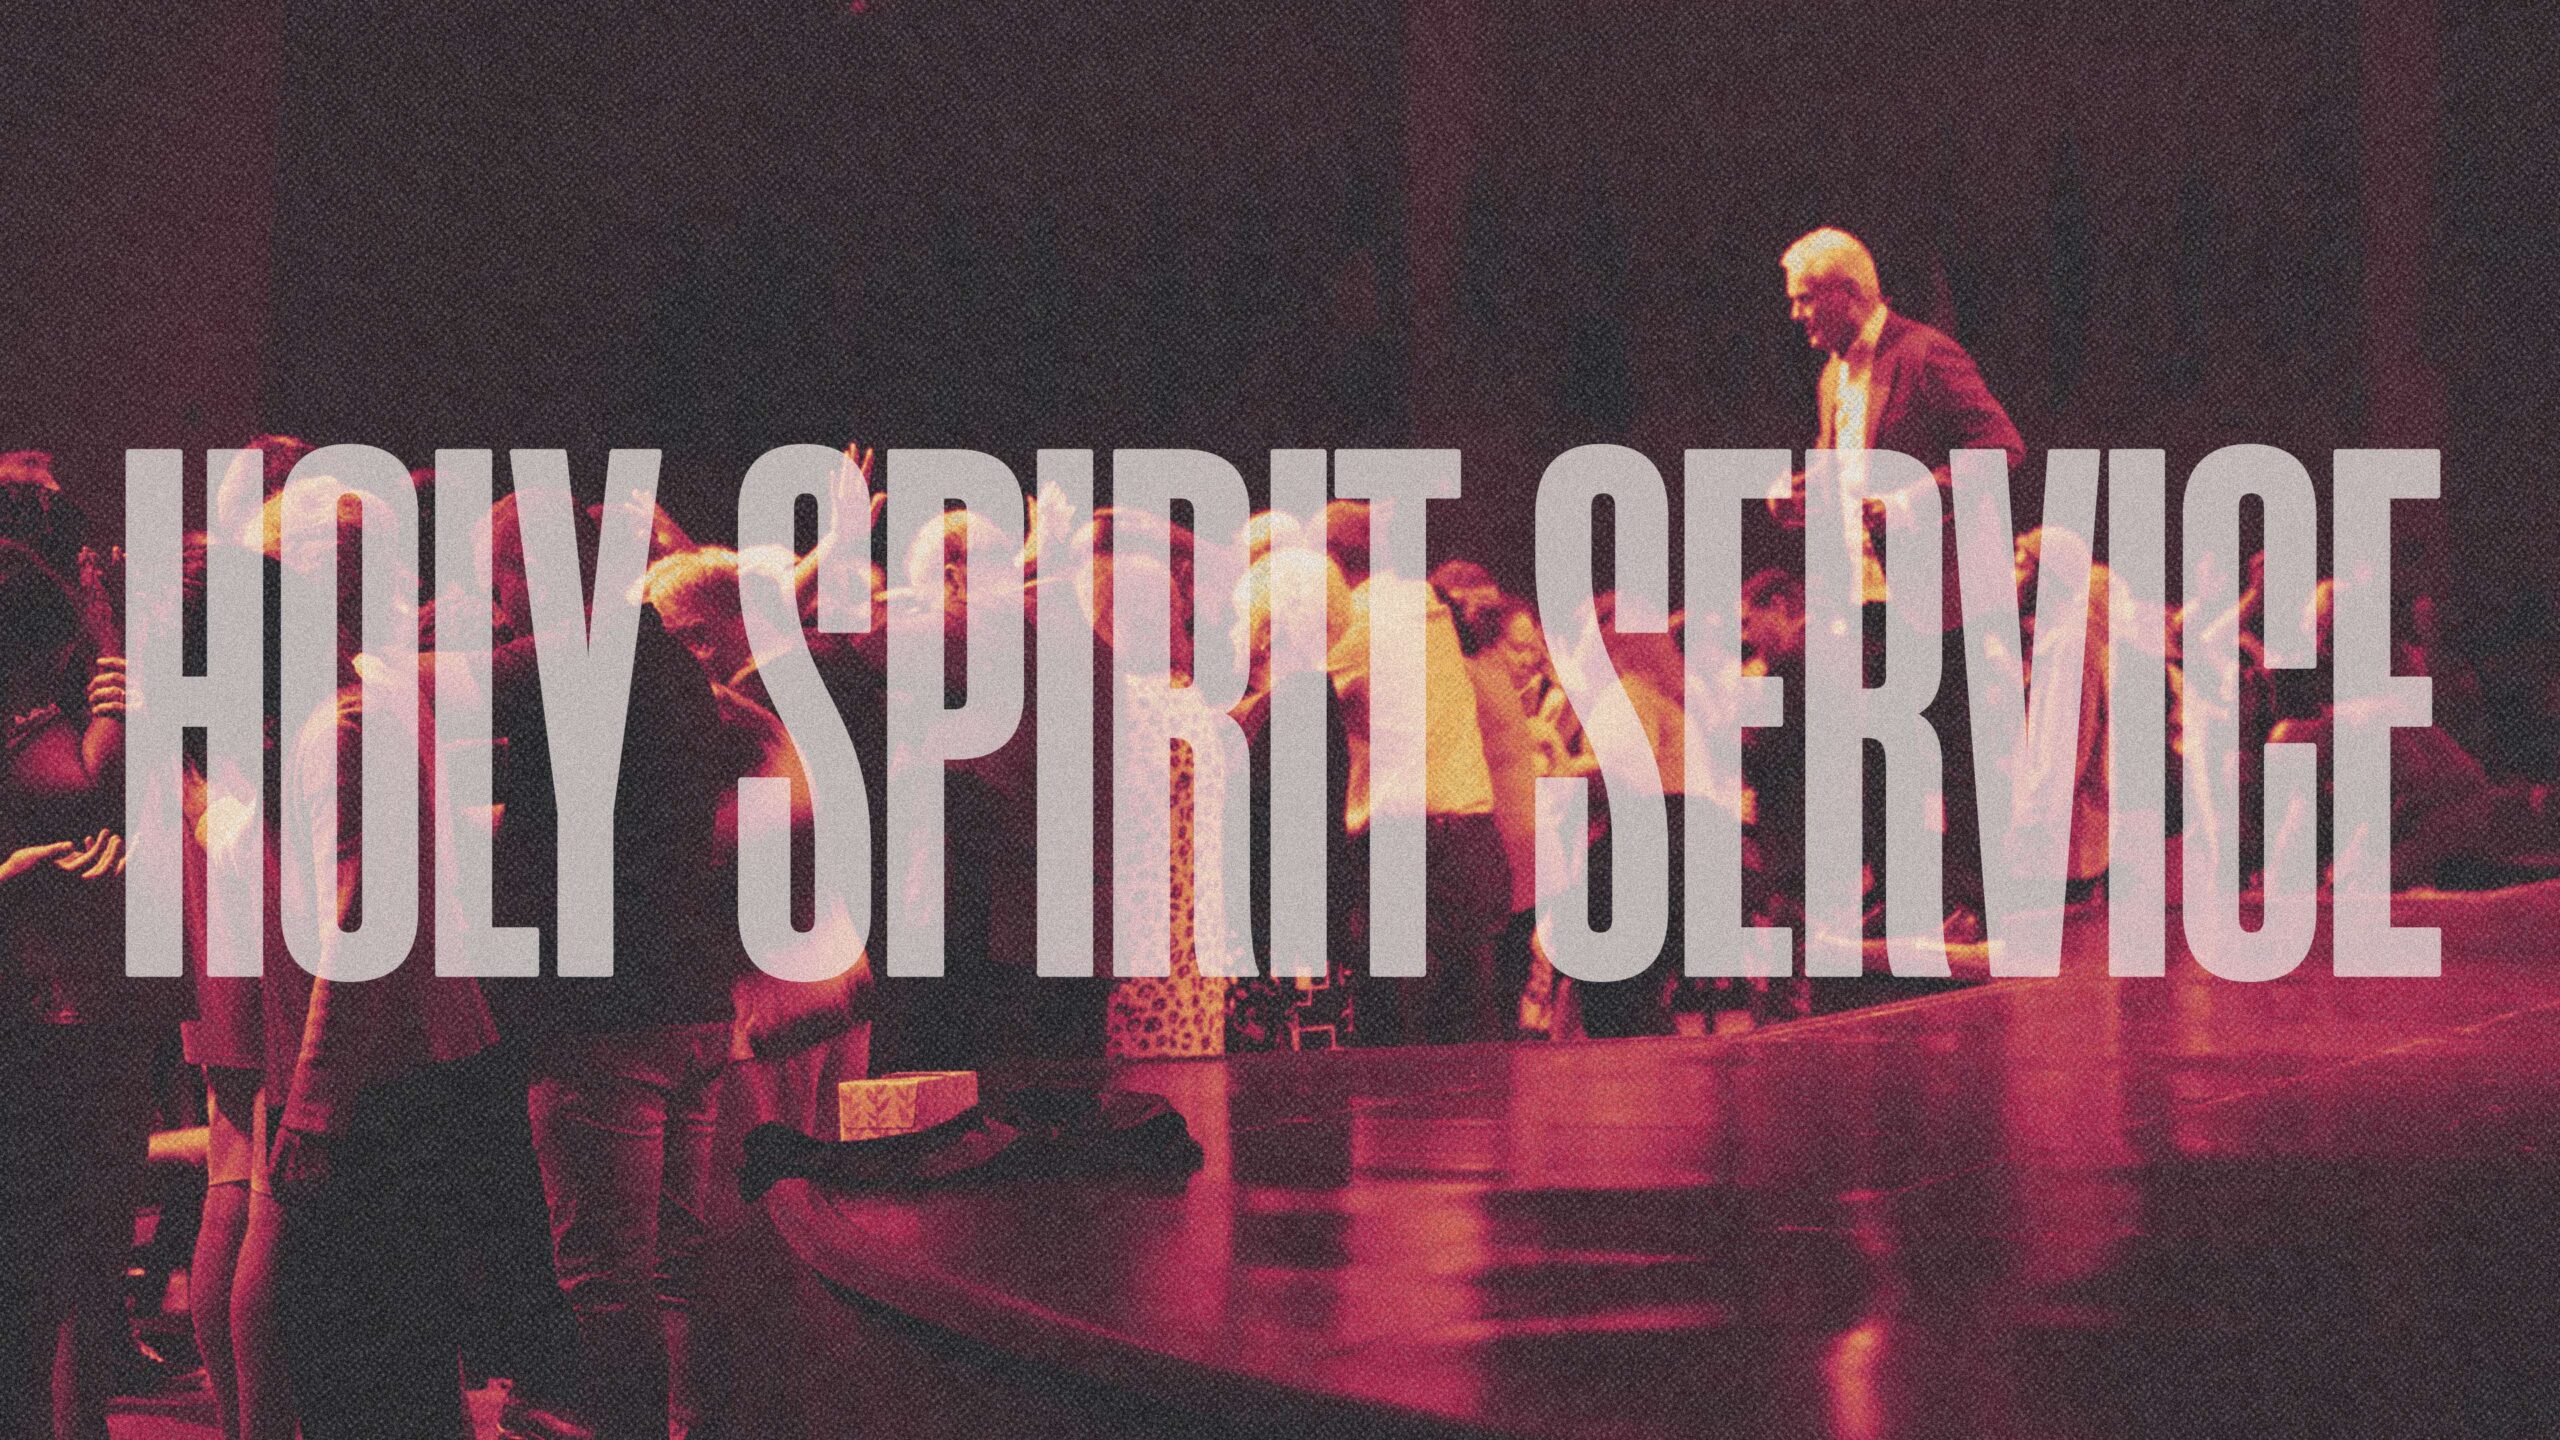 Holy Spirit Service